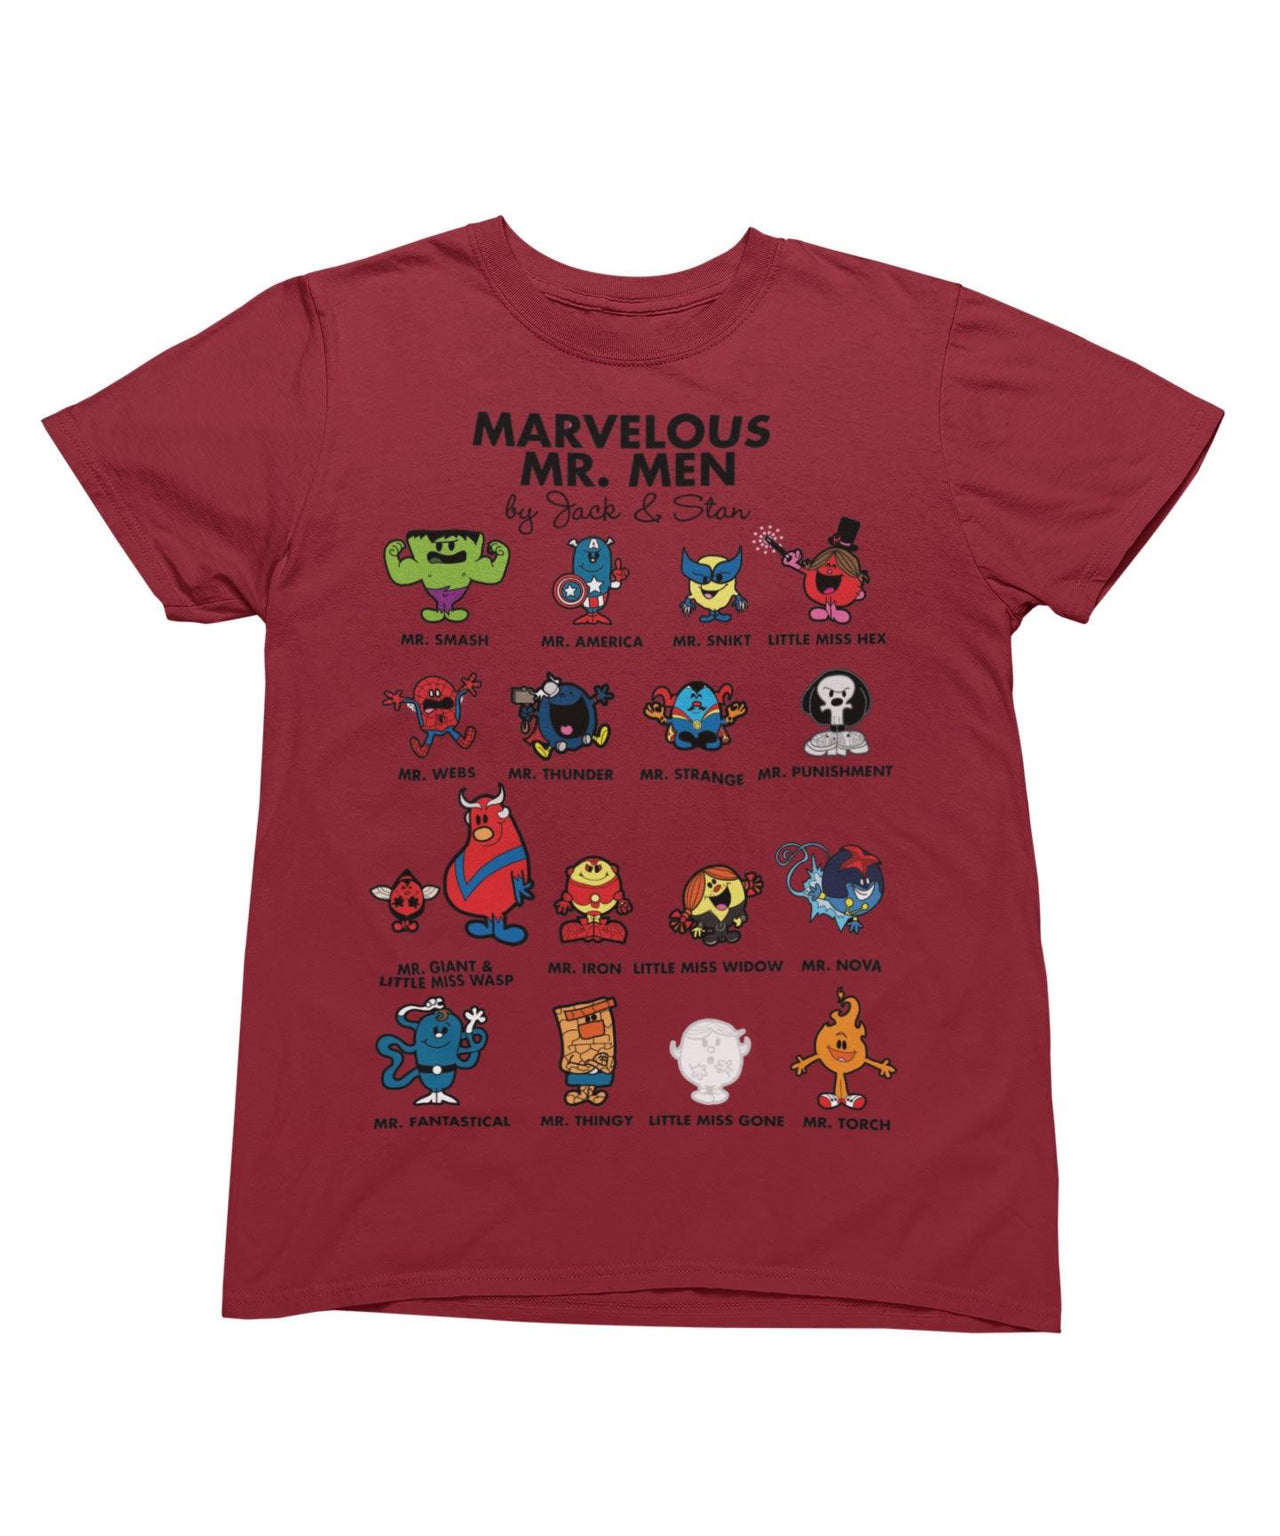 Top Notchy Marvelous Mr Men Men's/Unisex Graphic T-Shirt For Men 8Ball